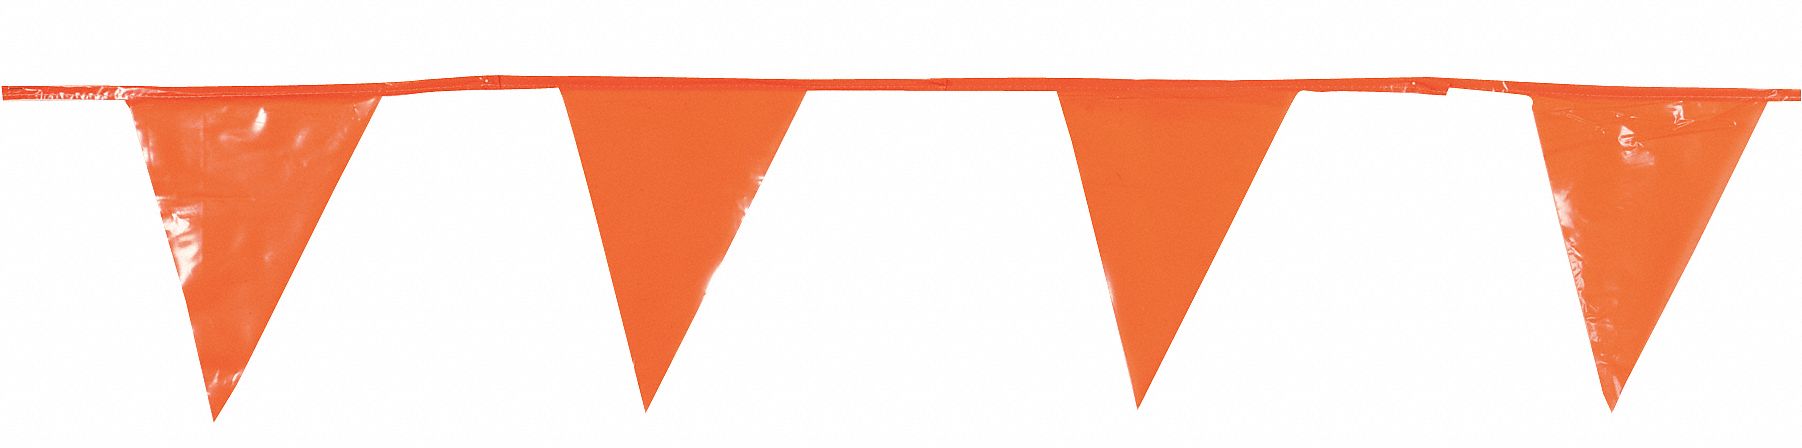 8PEV8 - Pennants Polyethylene Orange 100 ft.